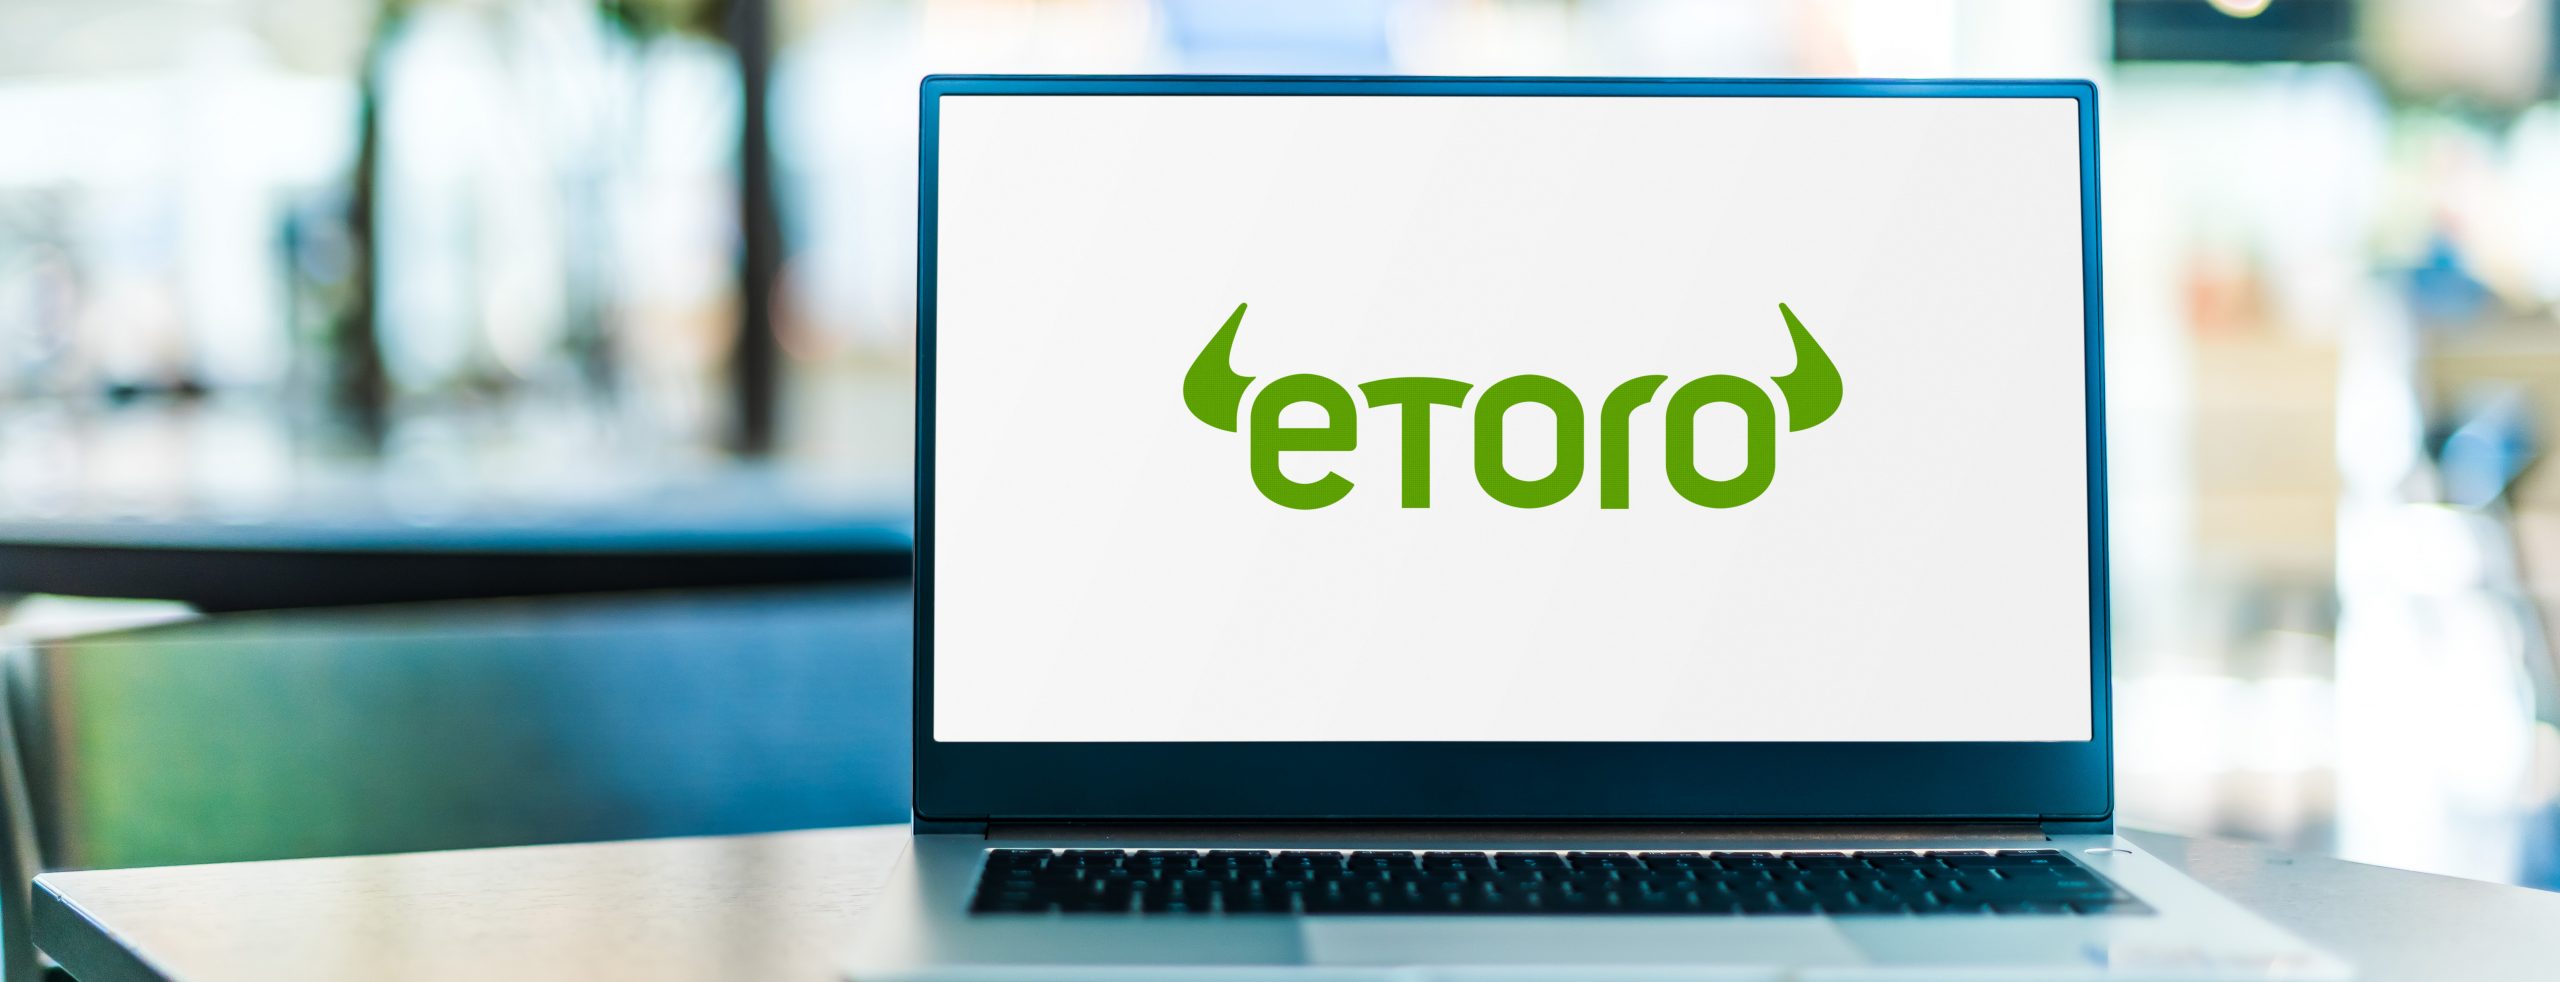 ETORO Login and platform review